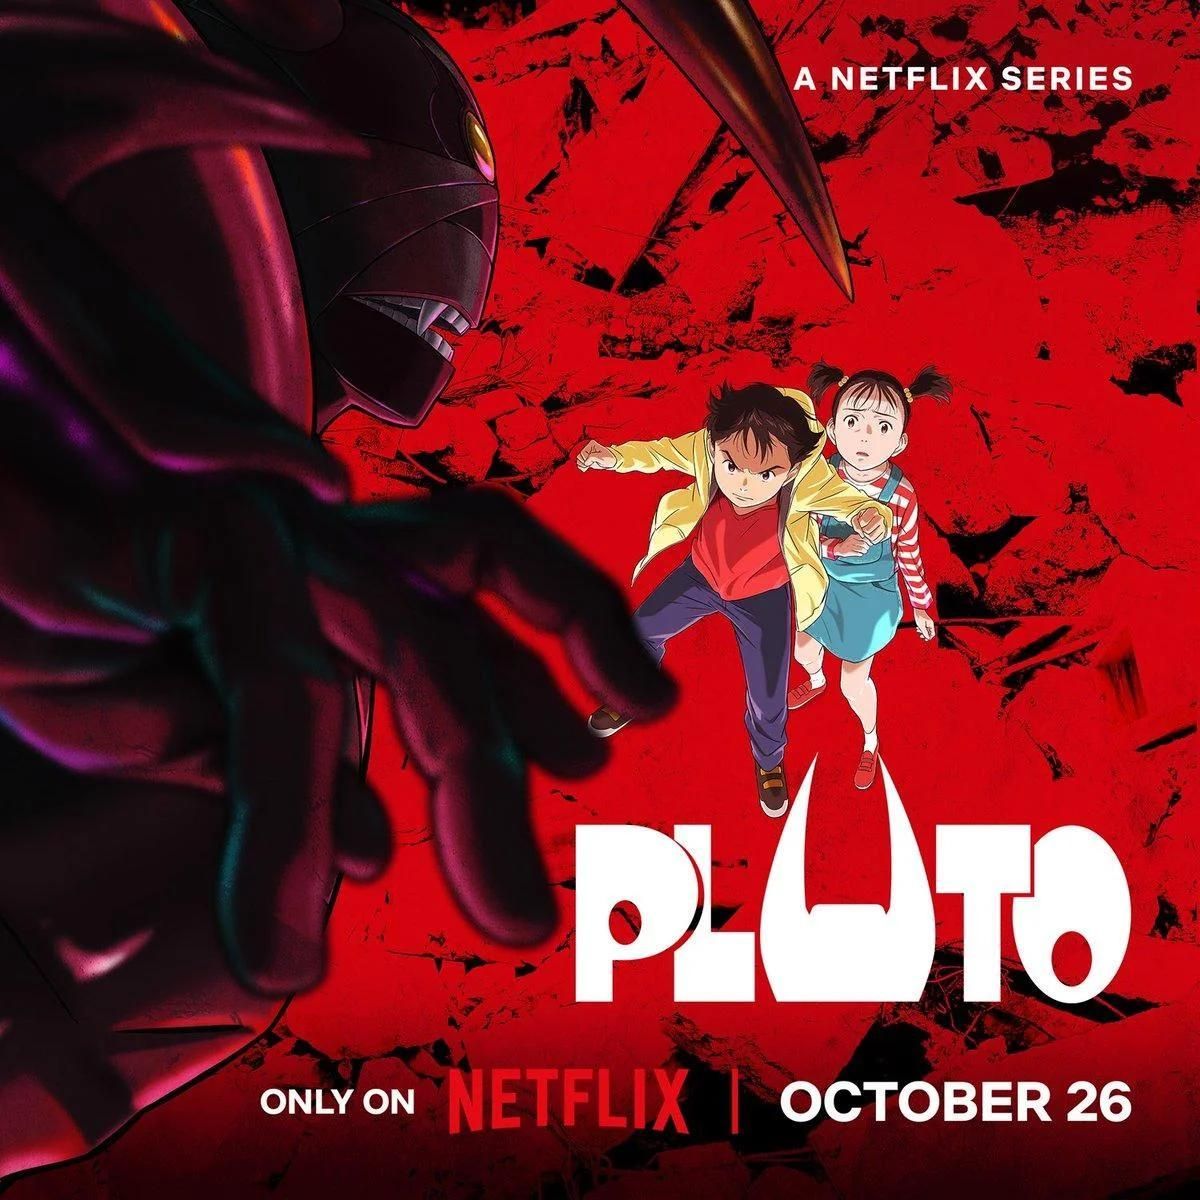 Netflix Pluto Poster 2